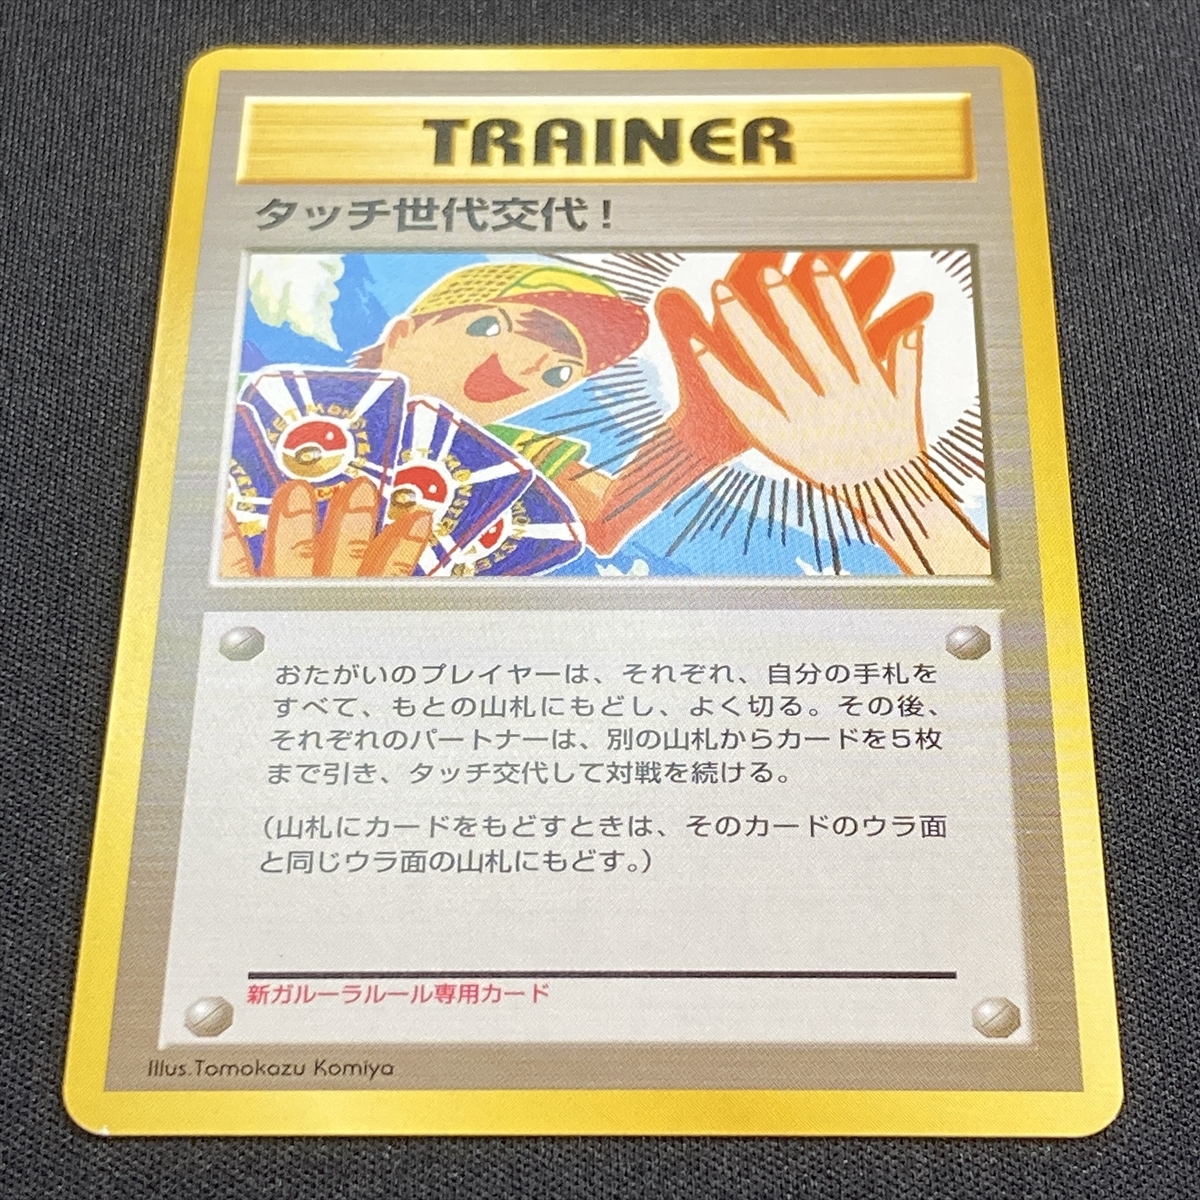 Touch Generational Change Promo Pokemon Card Japanese Nintendo トレーナー タッチ世代交代 プロモ ポケモン カード_画像2